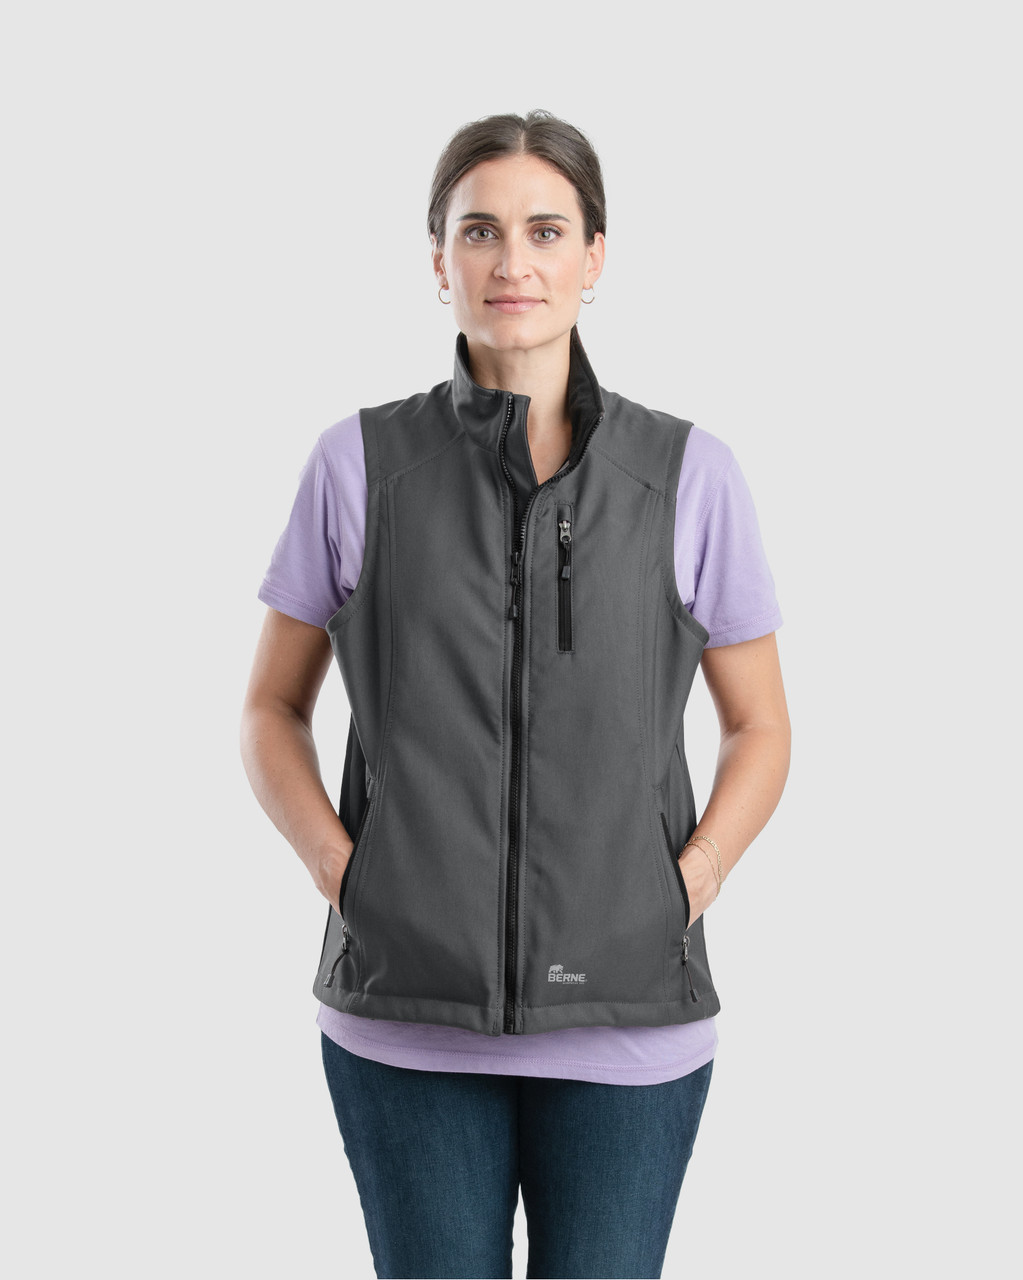 Berne Women's Softshell Vest Magnet